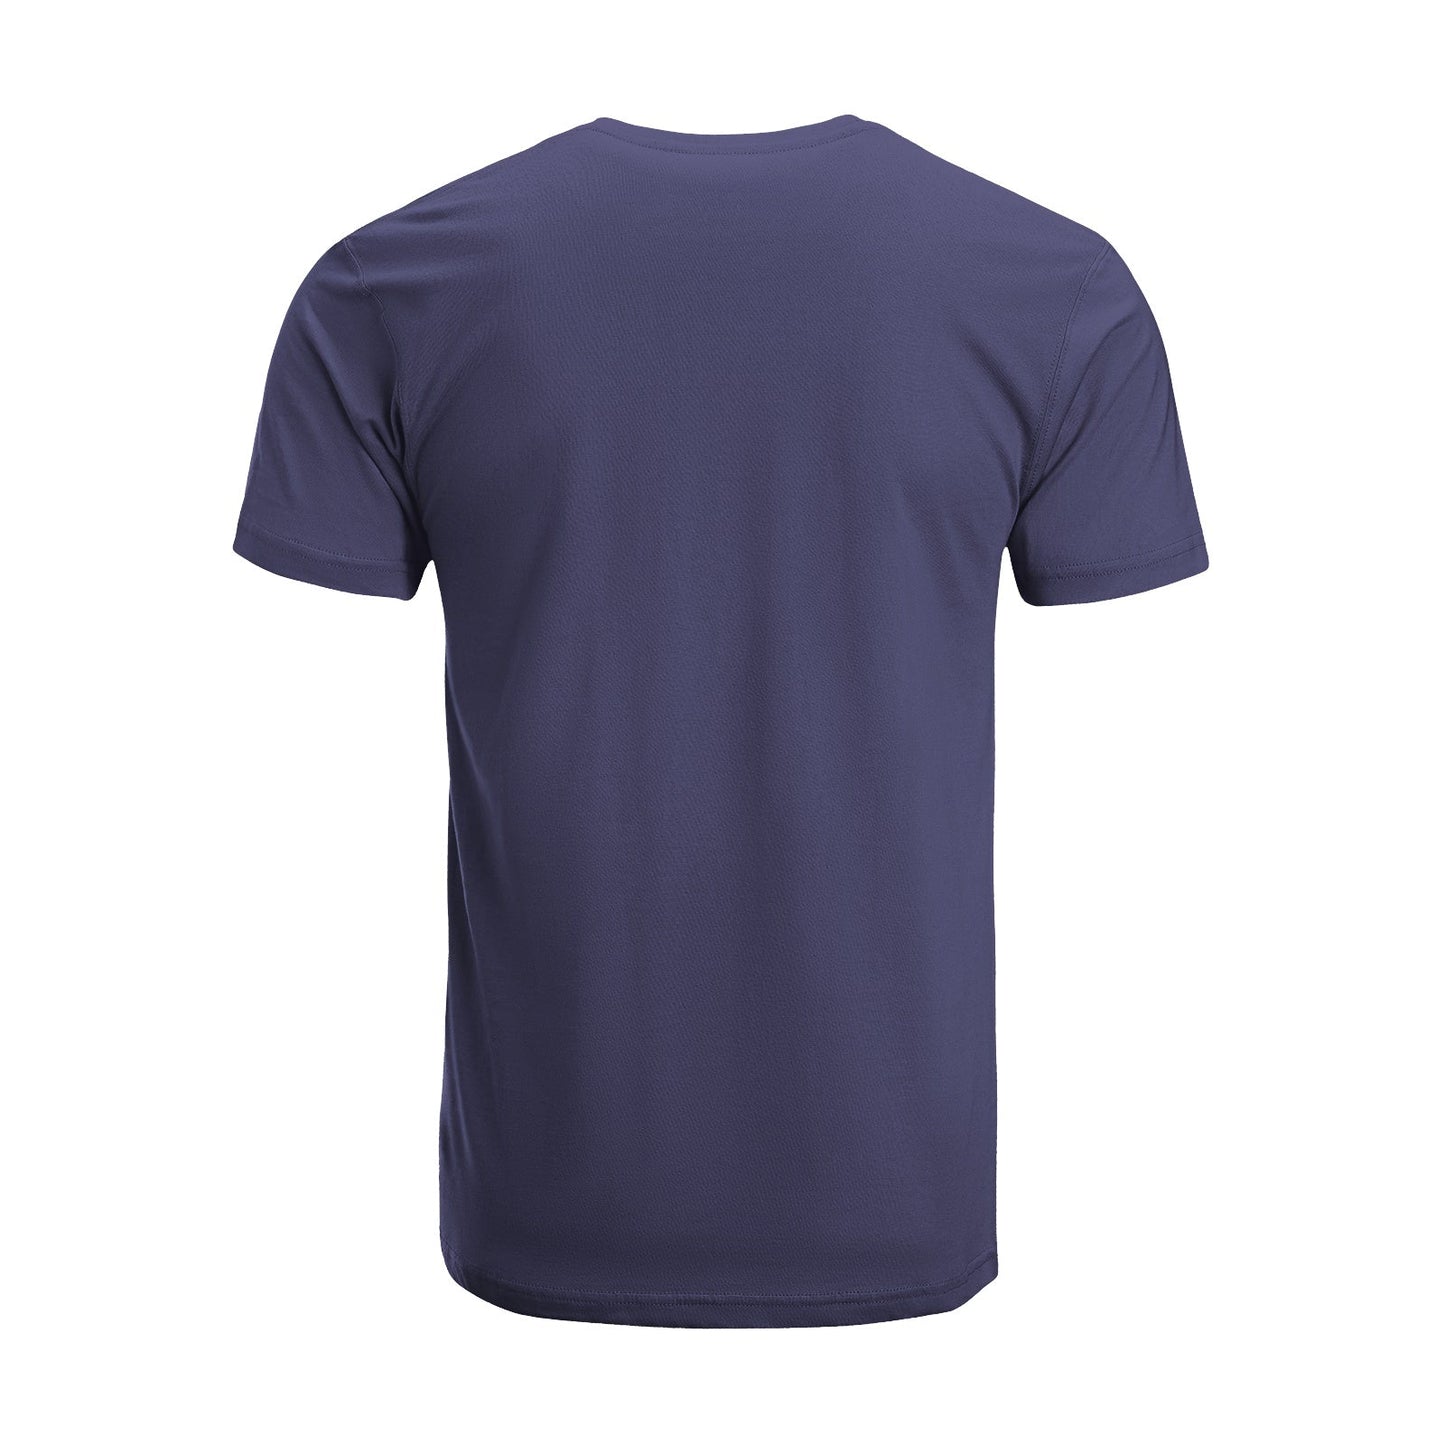 Unisex Short Sleeve Crew Neck Cotton Jersey T-Shirt CAT 23 - Tara-Outfits.com